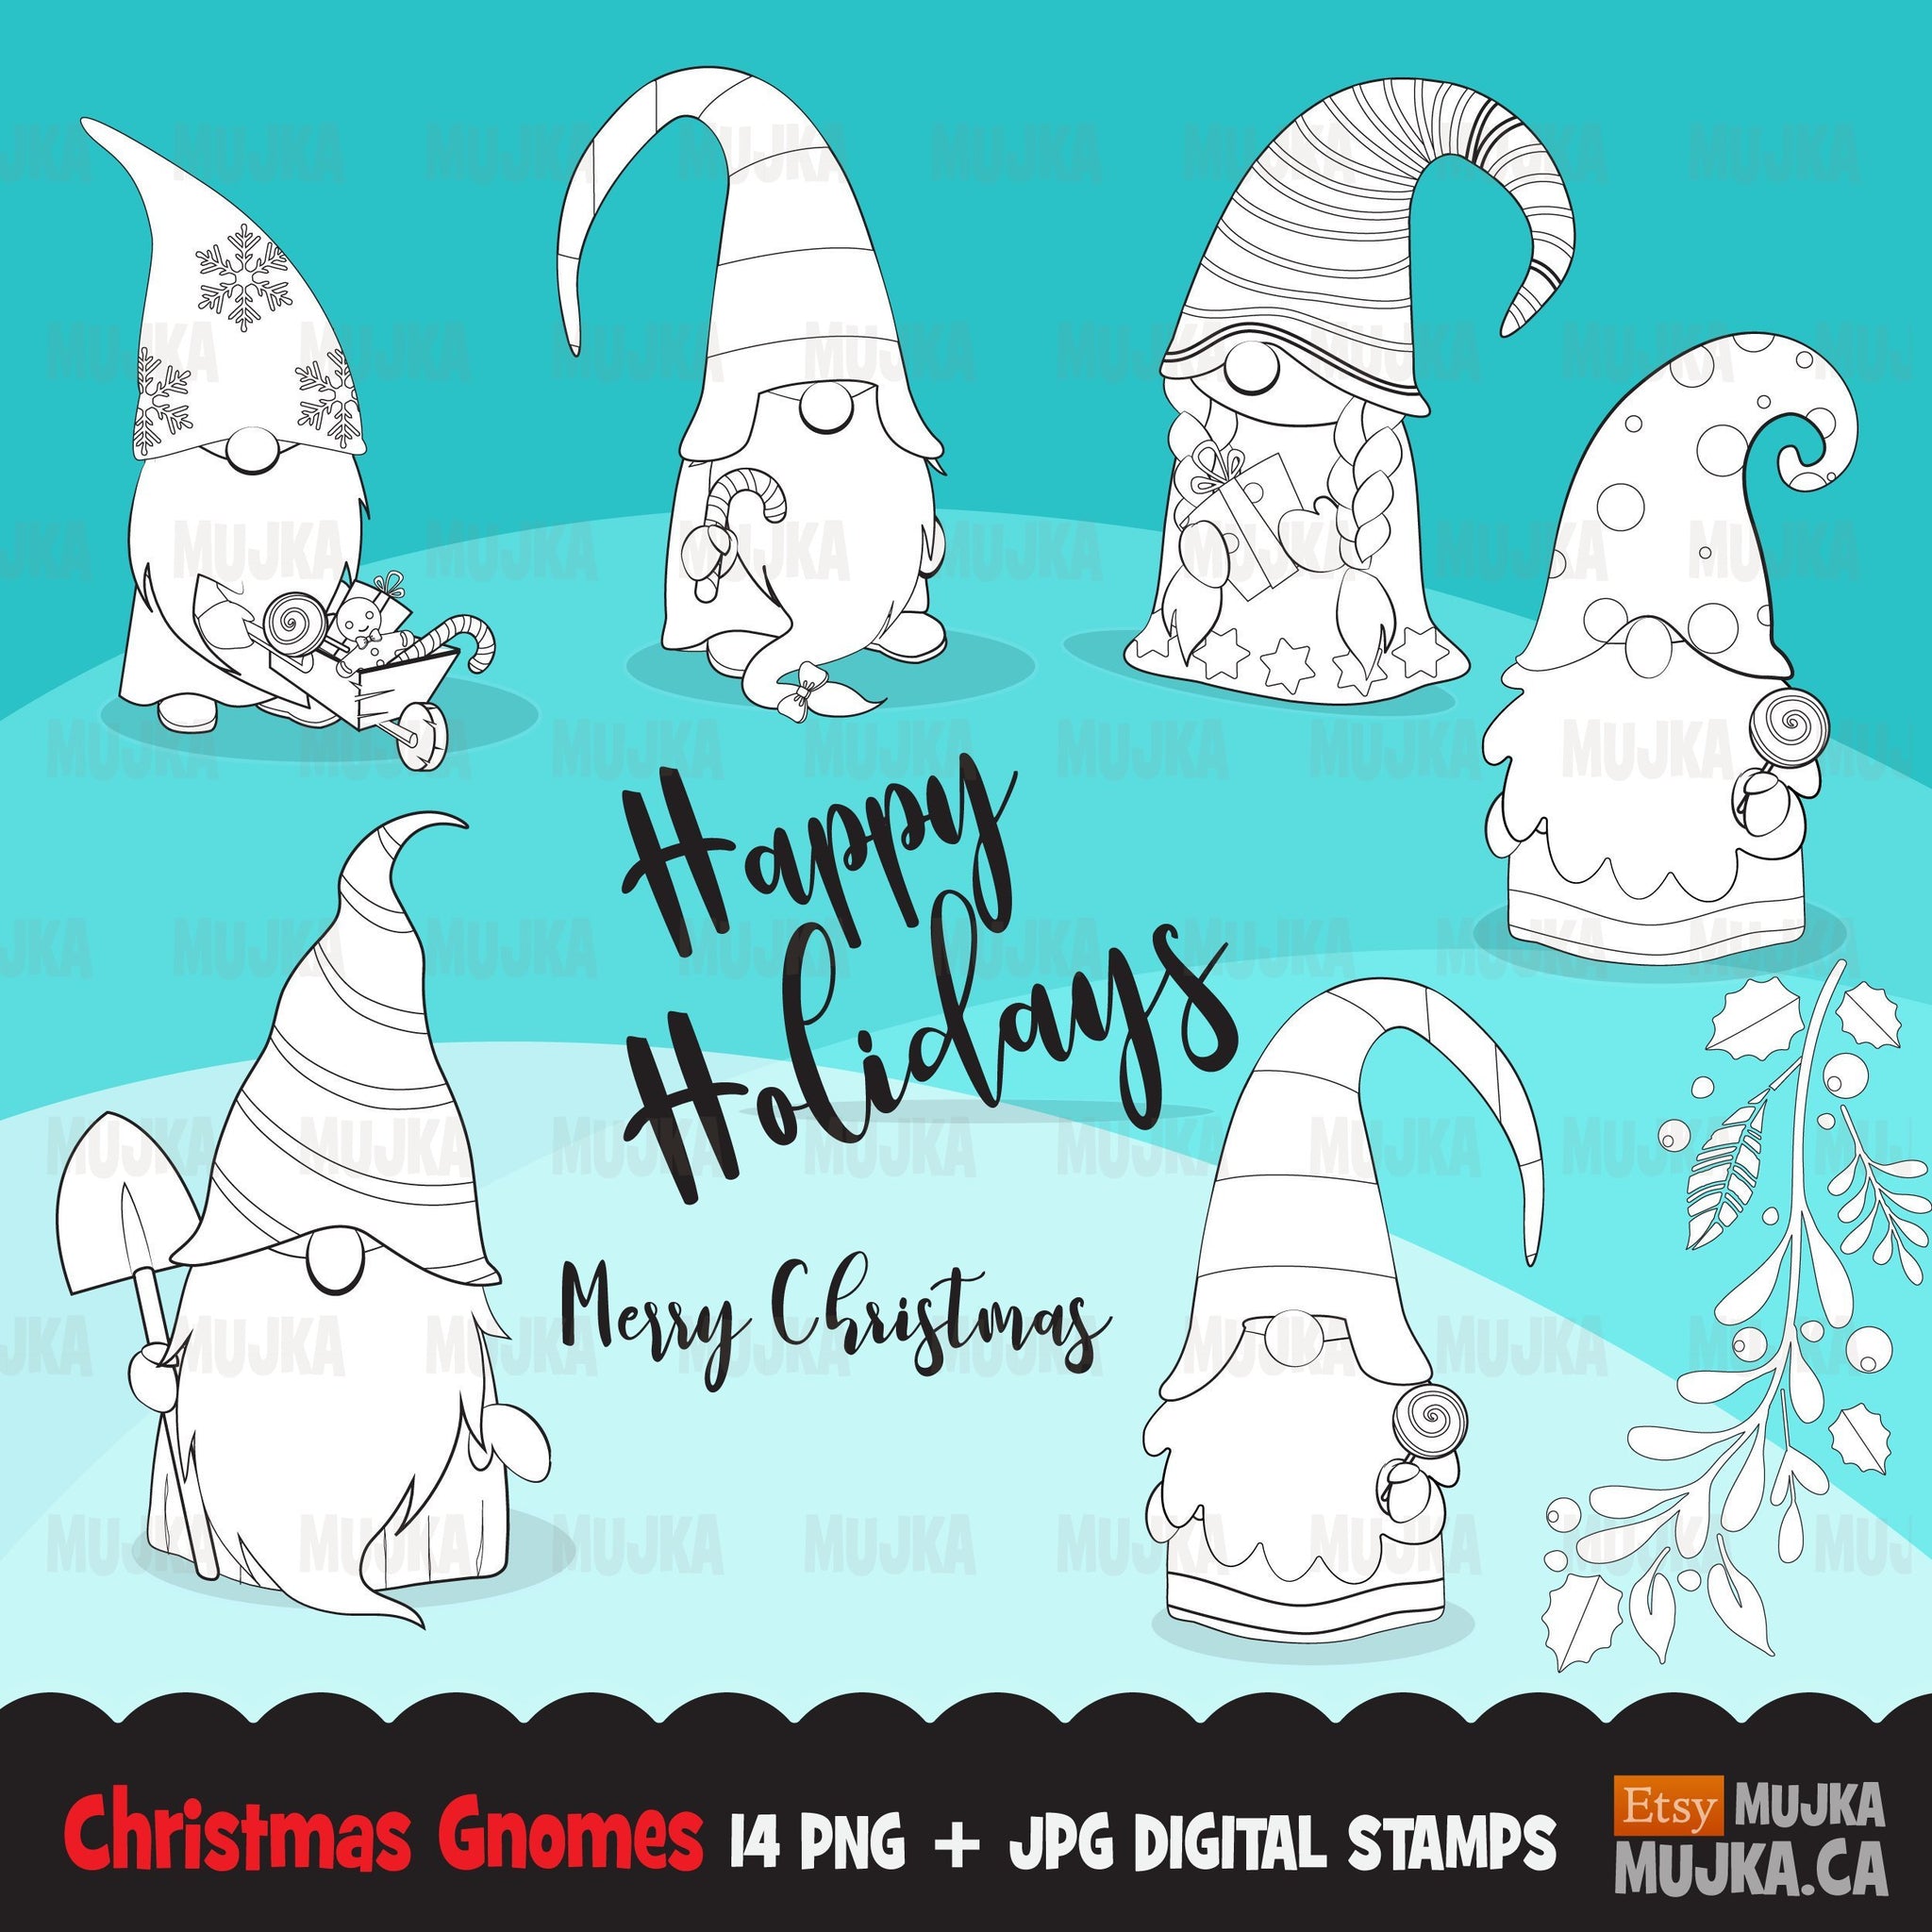 Christmas gnomes Digital stamps